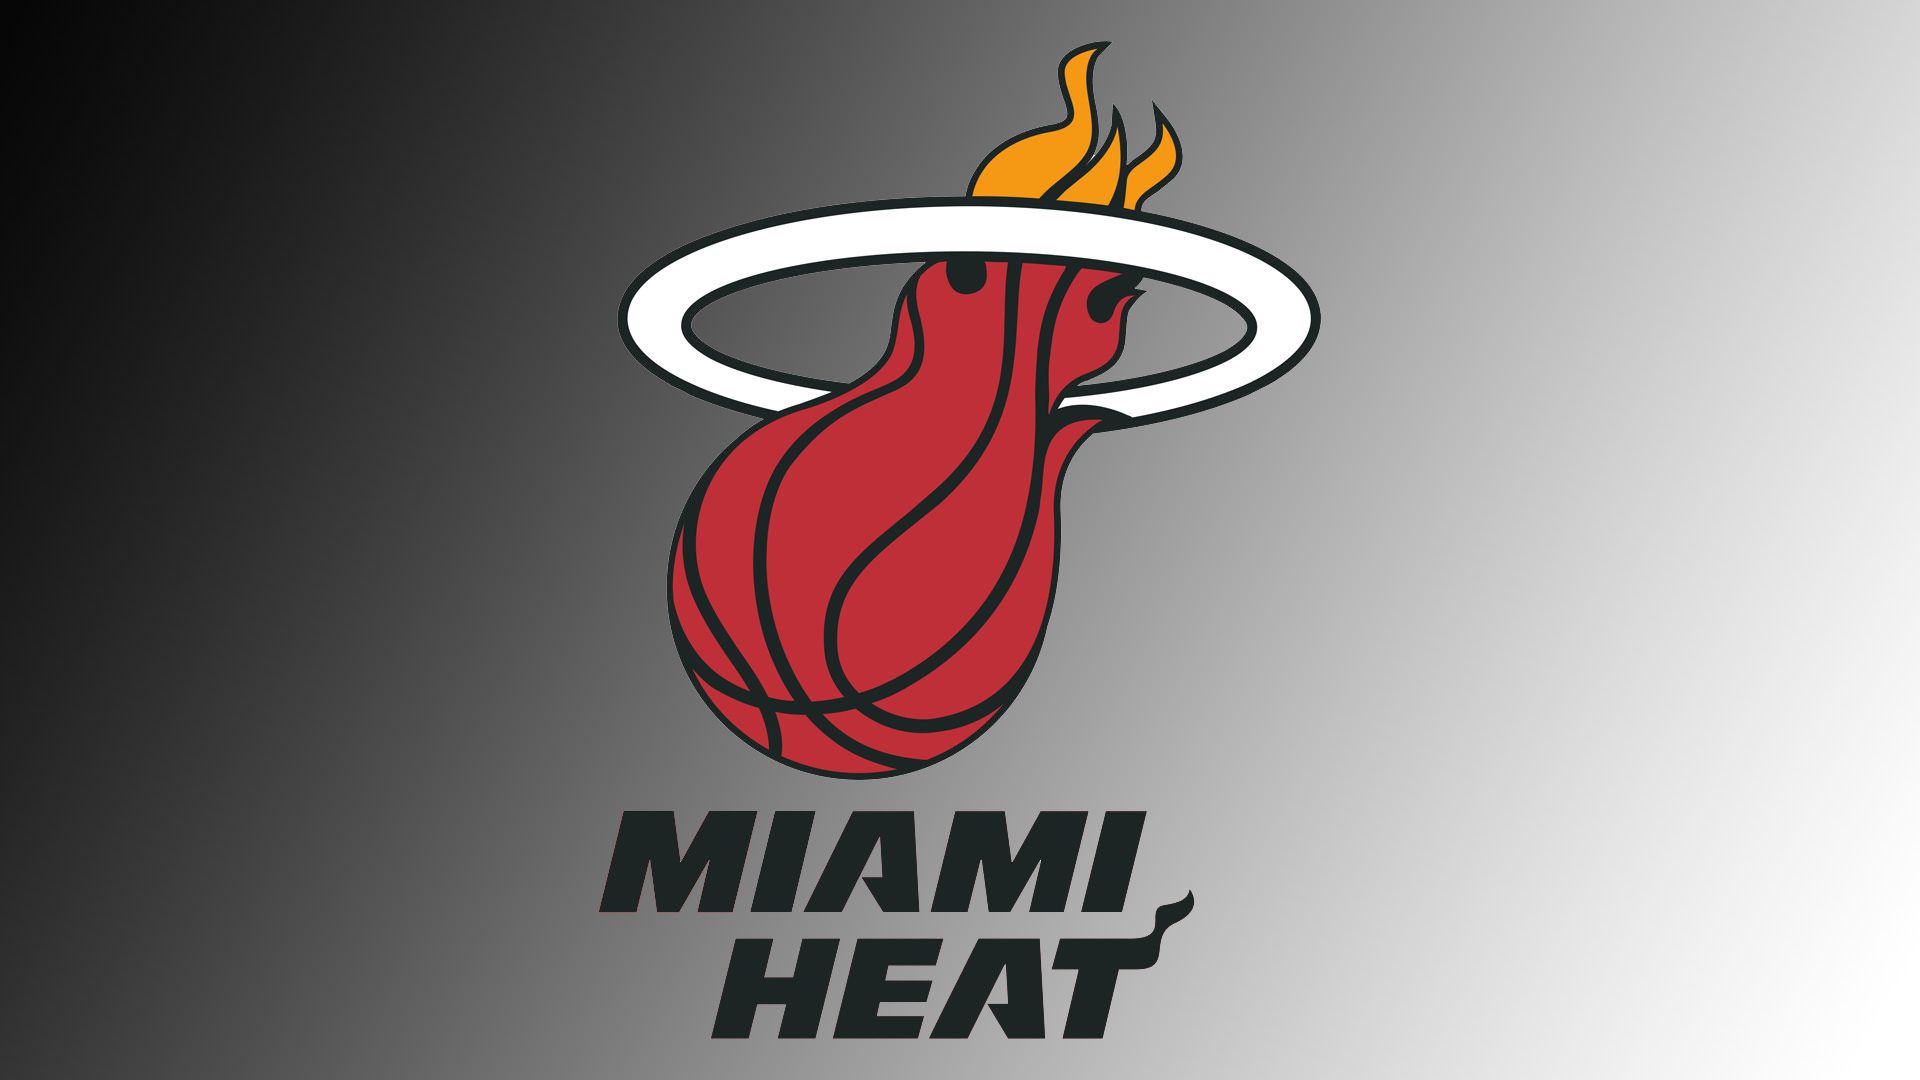 Miami Heat Wallpaper Image Photo Picture Background